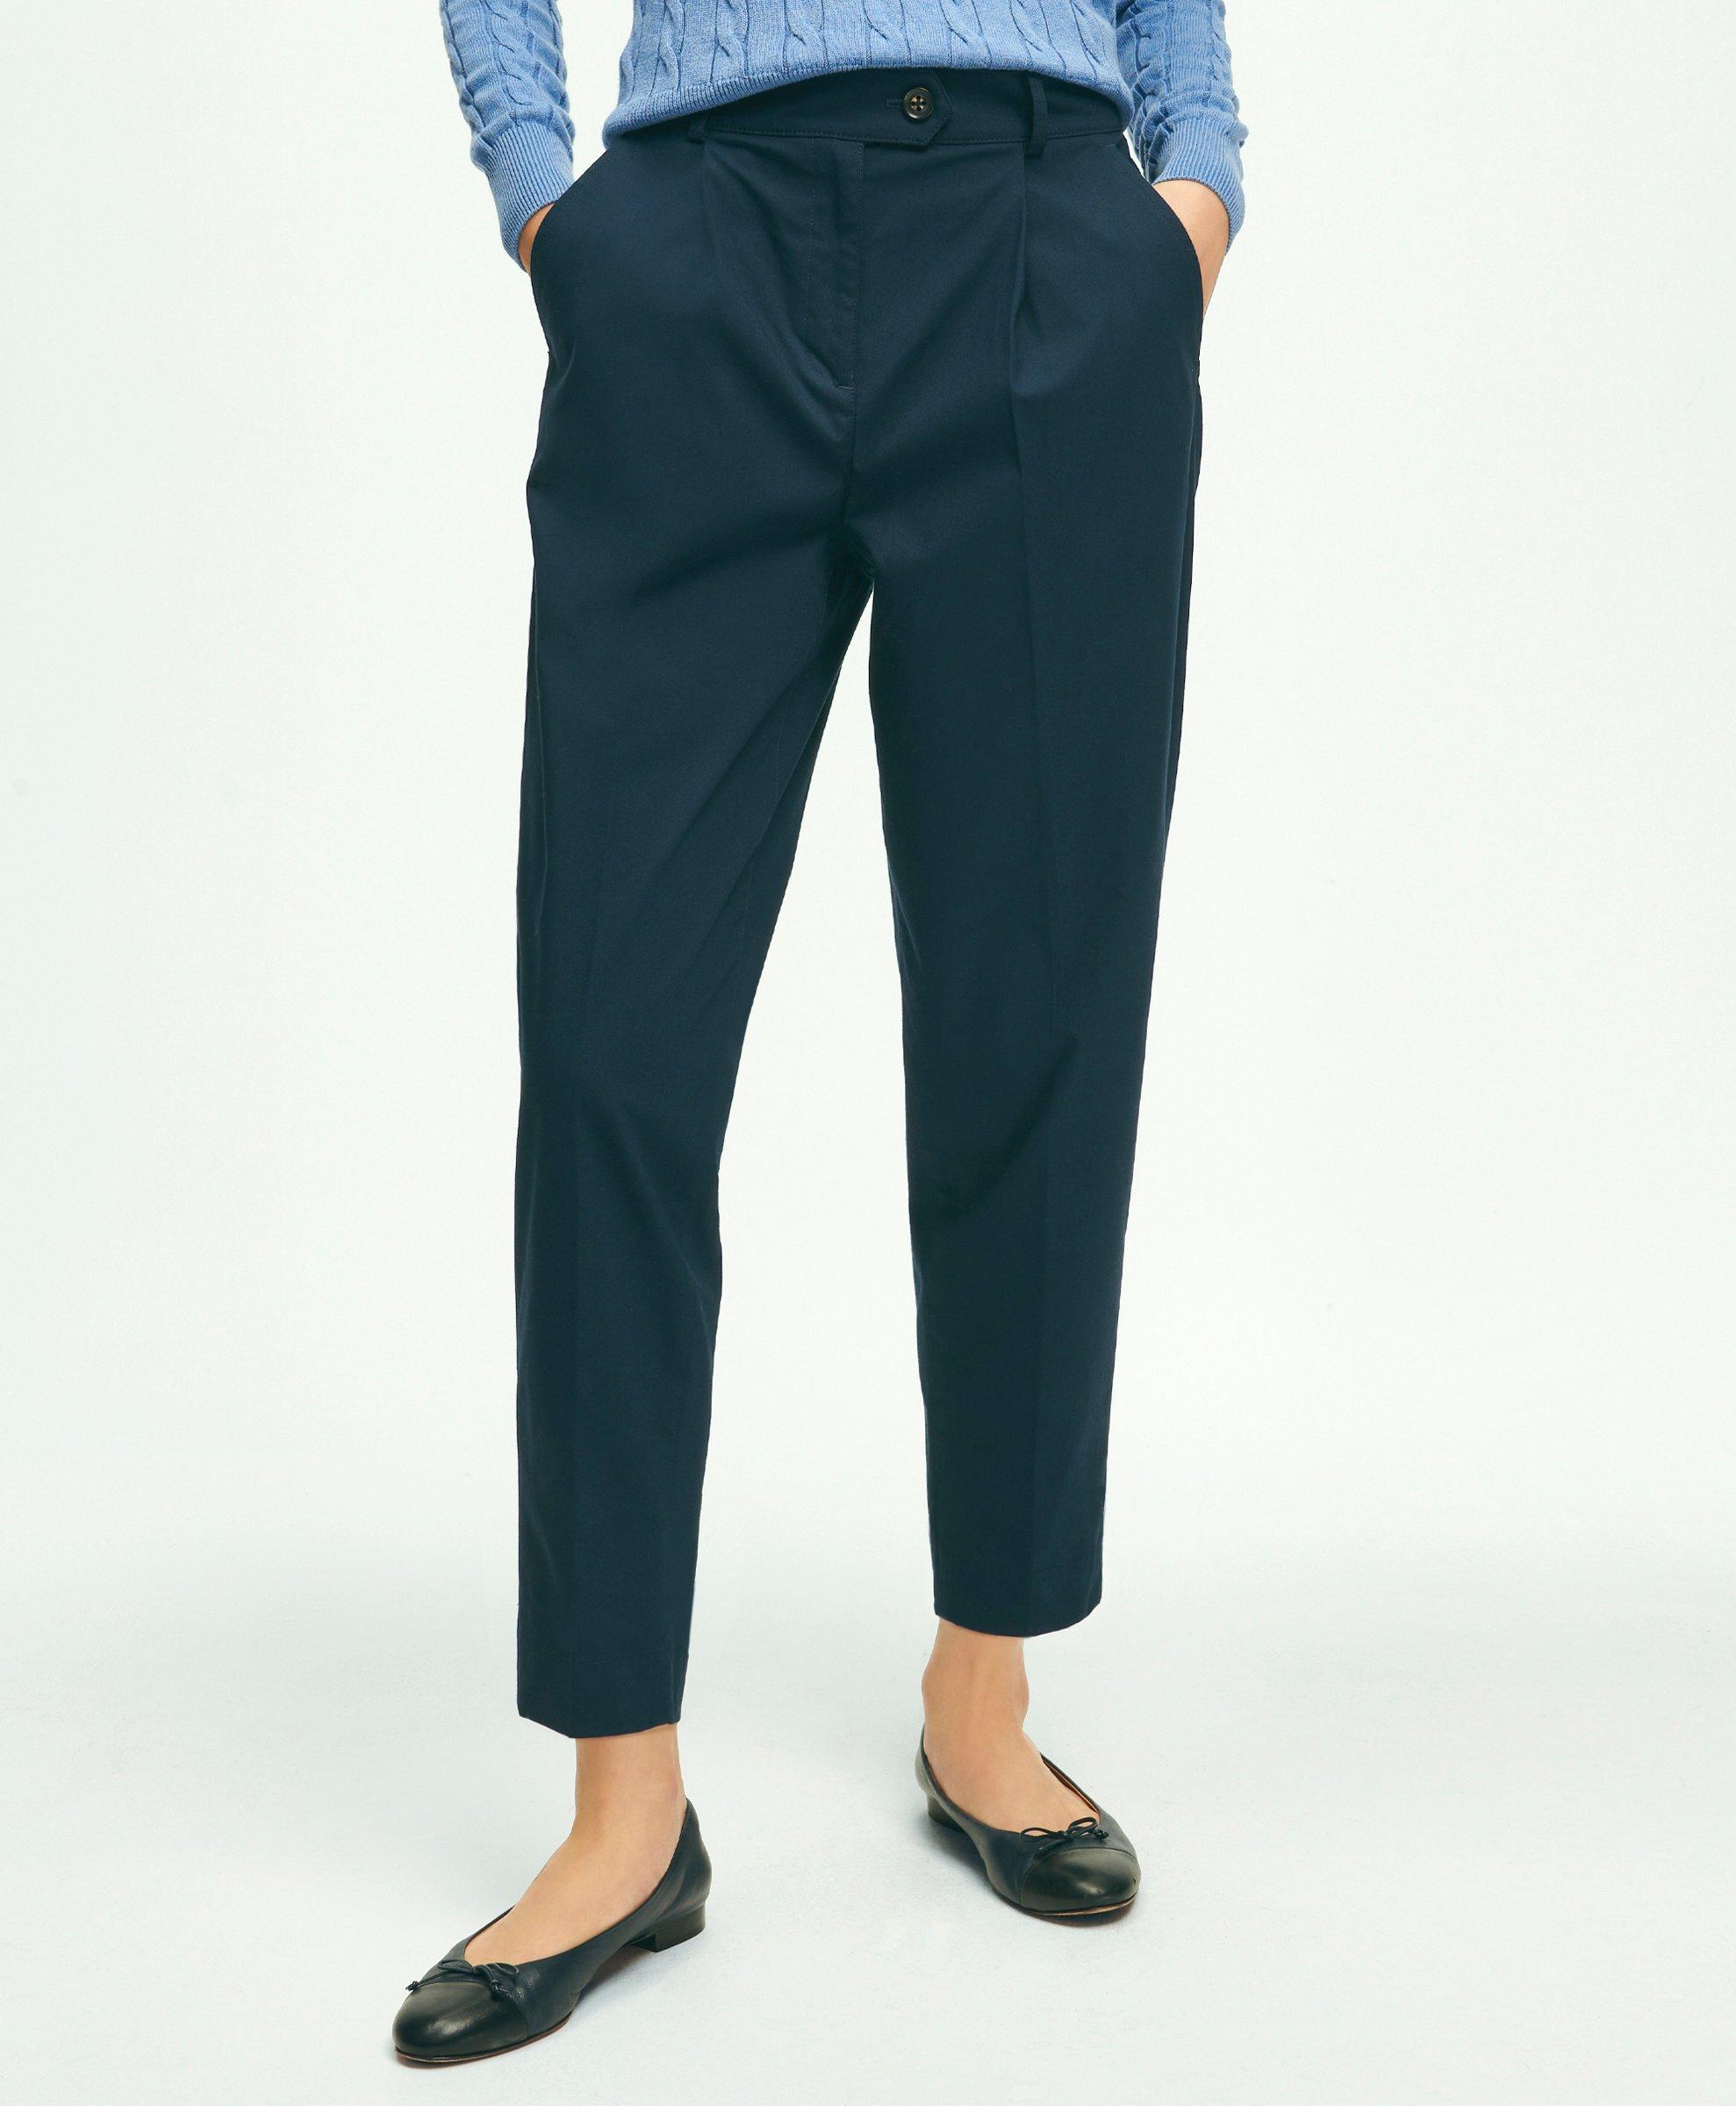 New Uniqlo Wide-Fit Pleated Dress Slacks Pants Navy Windowpane Size S